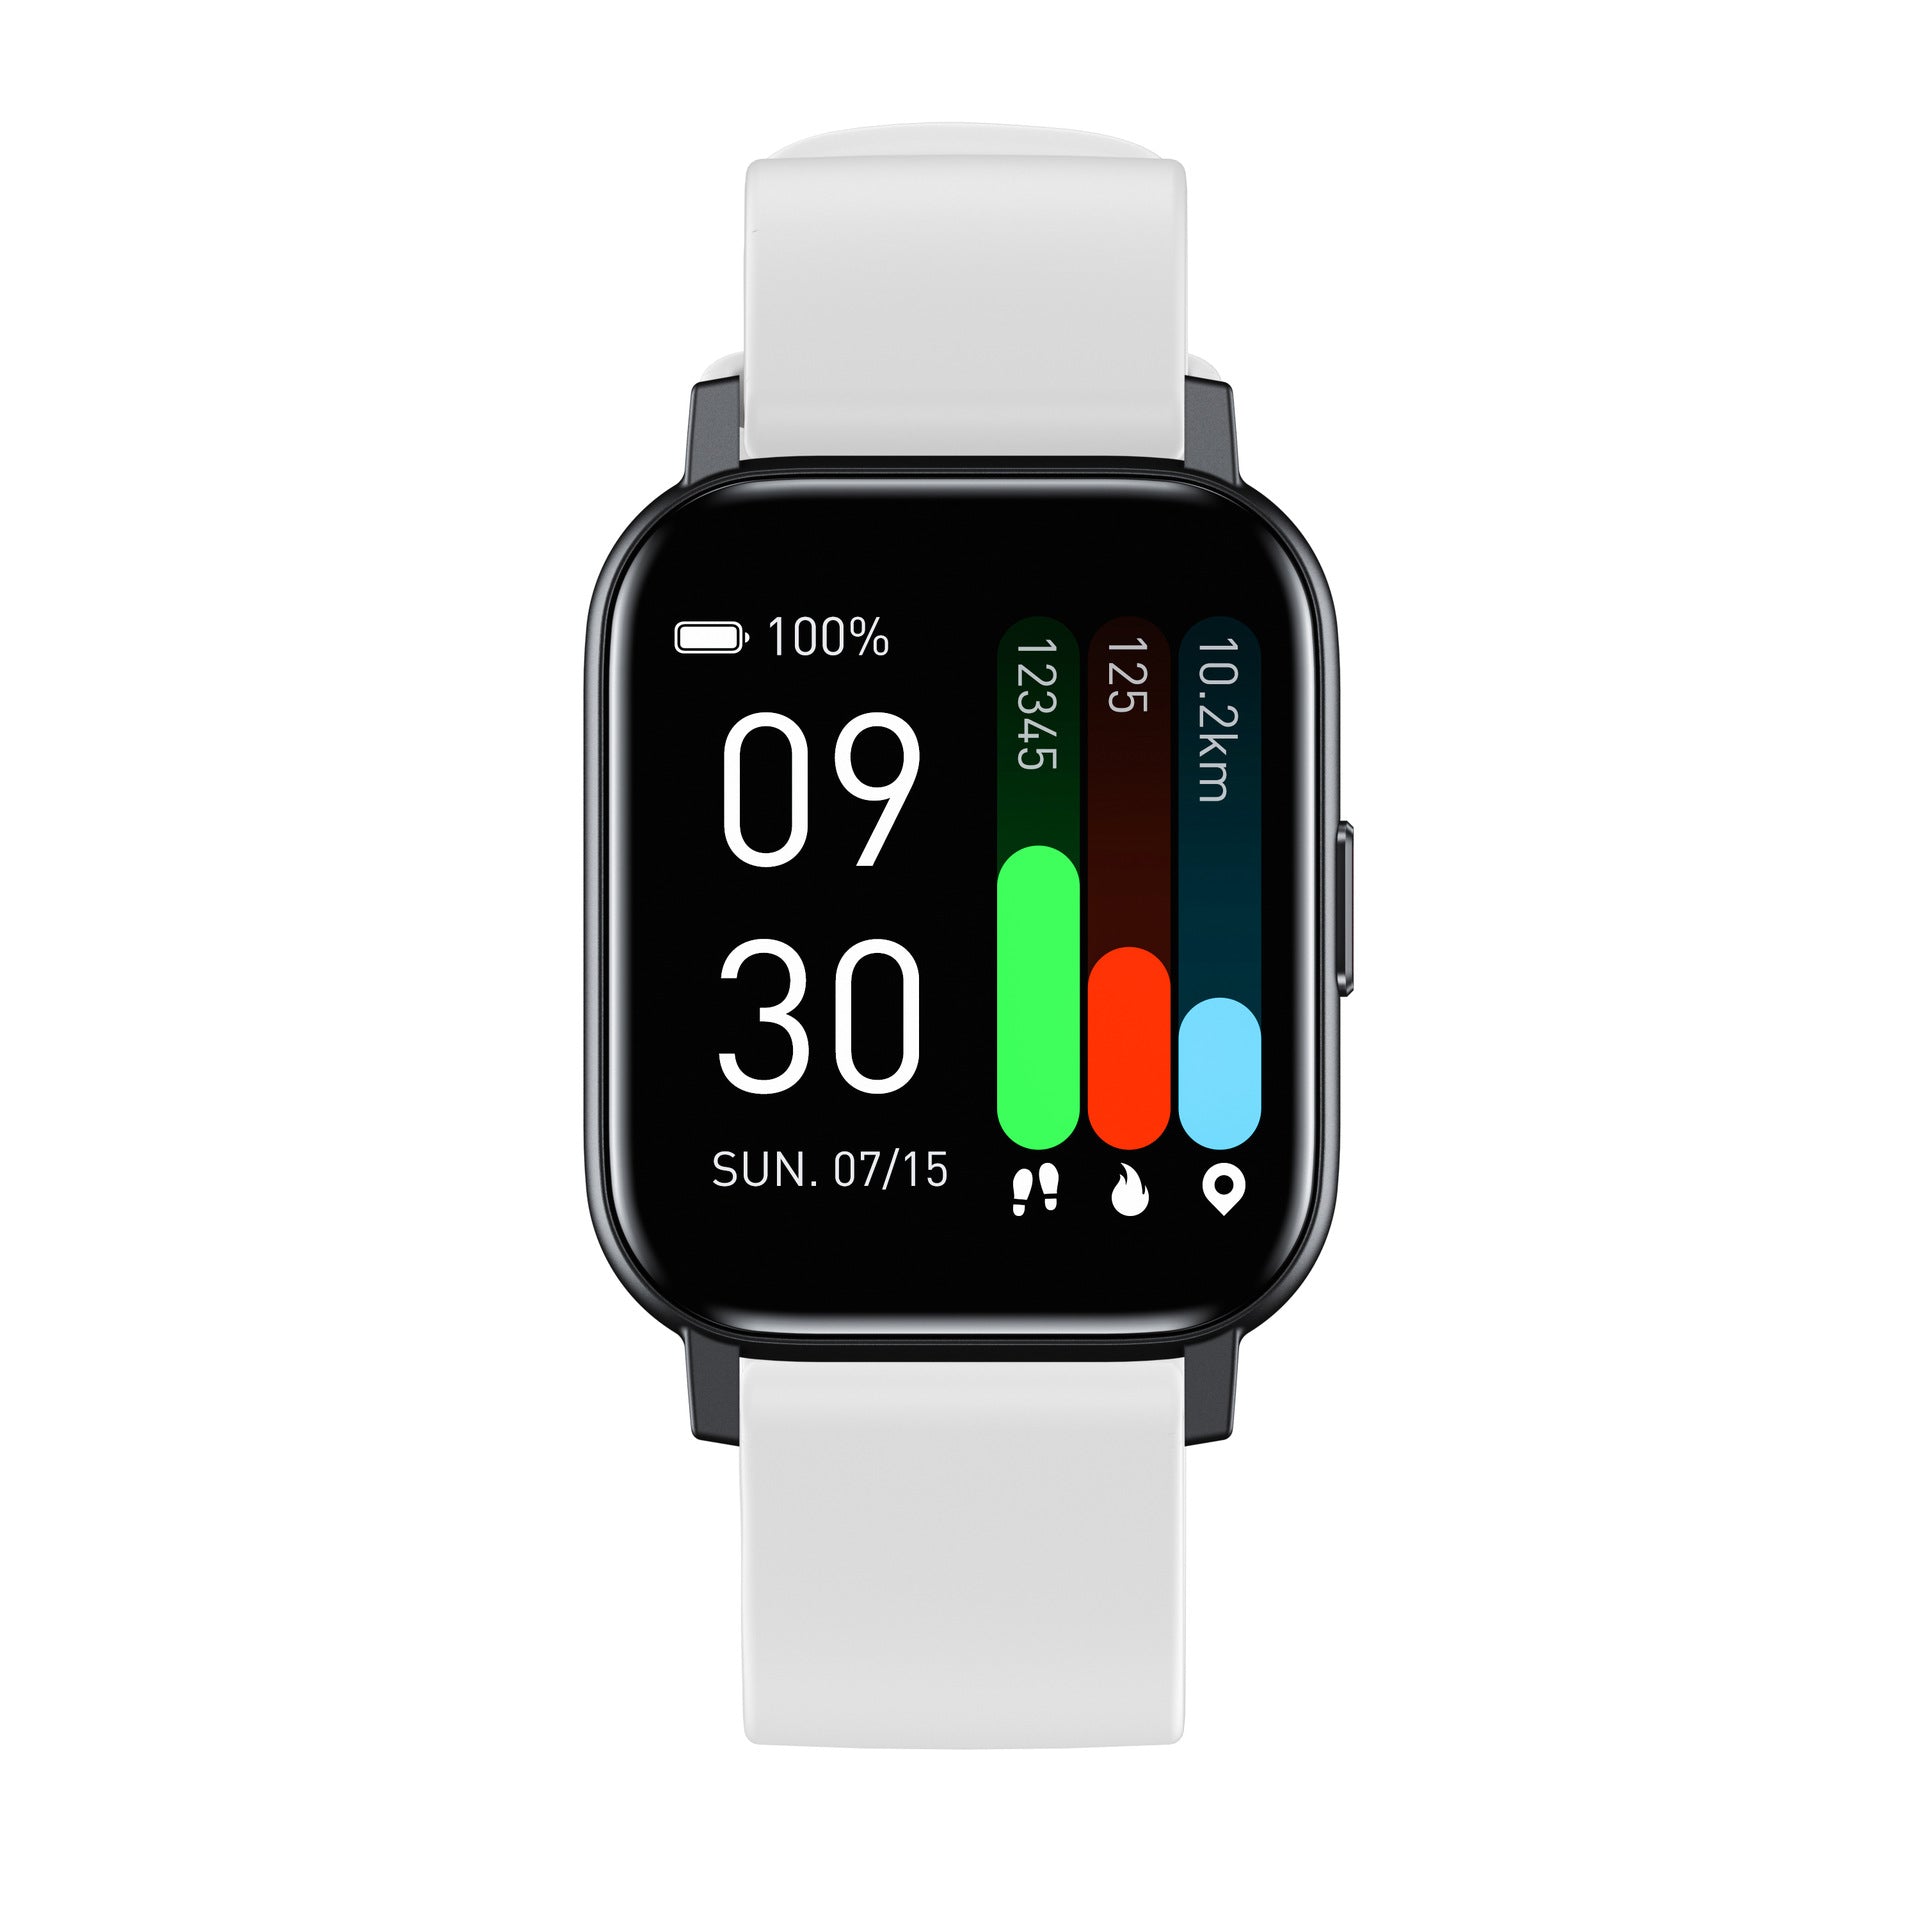 Body Temperature Push Heart Rate Alarm Pedometer Waterproof Smart Watch